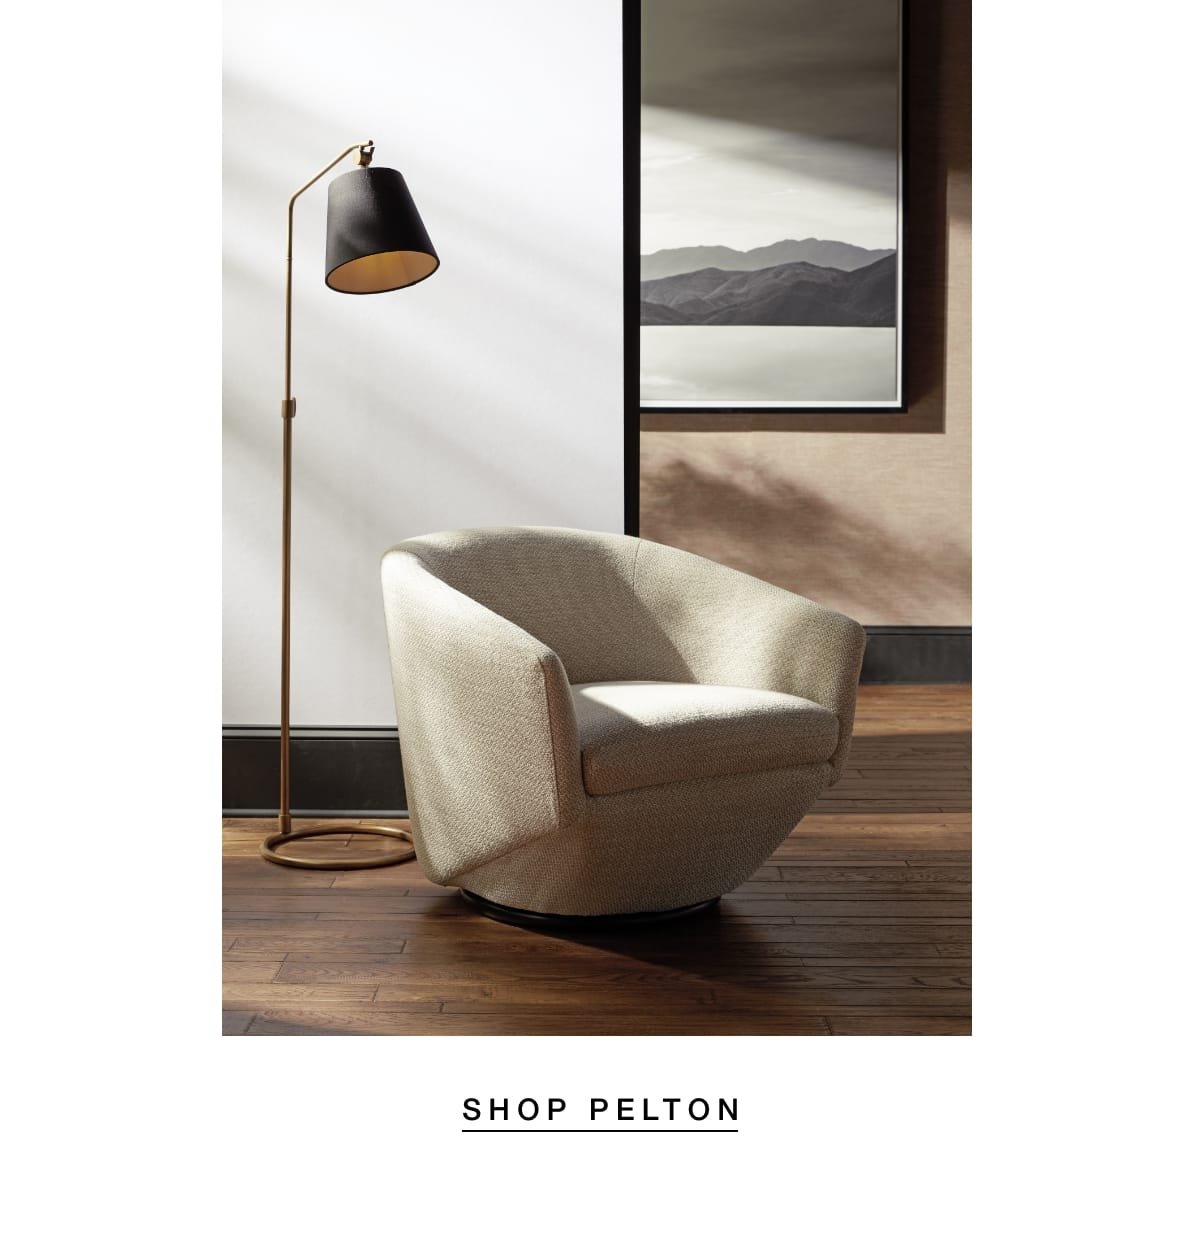 Shop Pelton